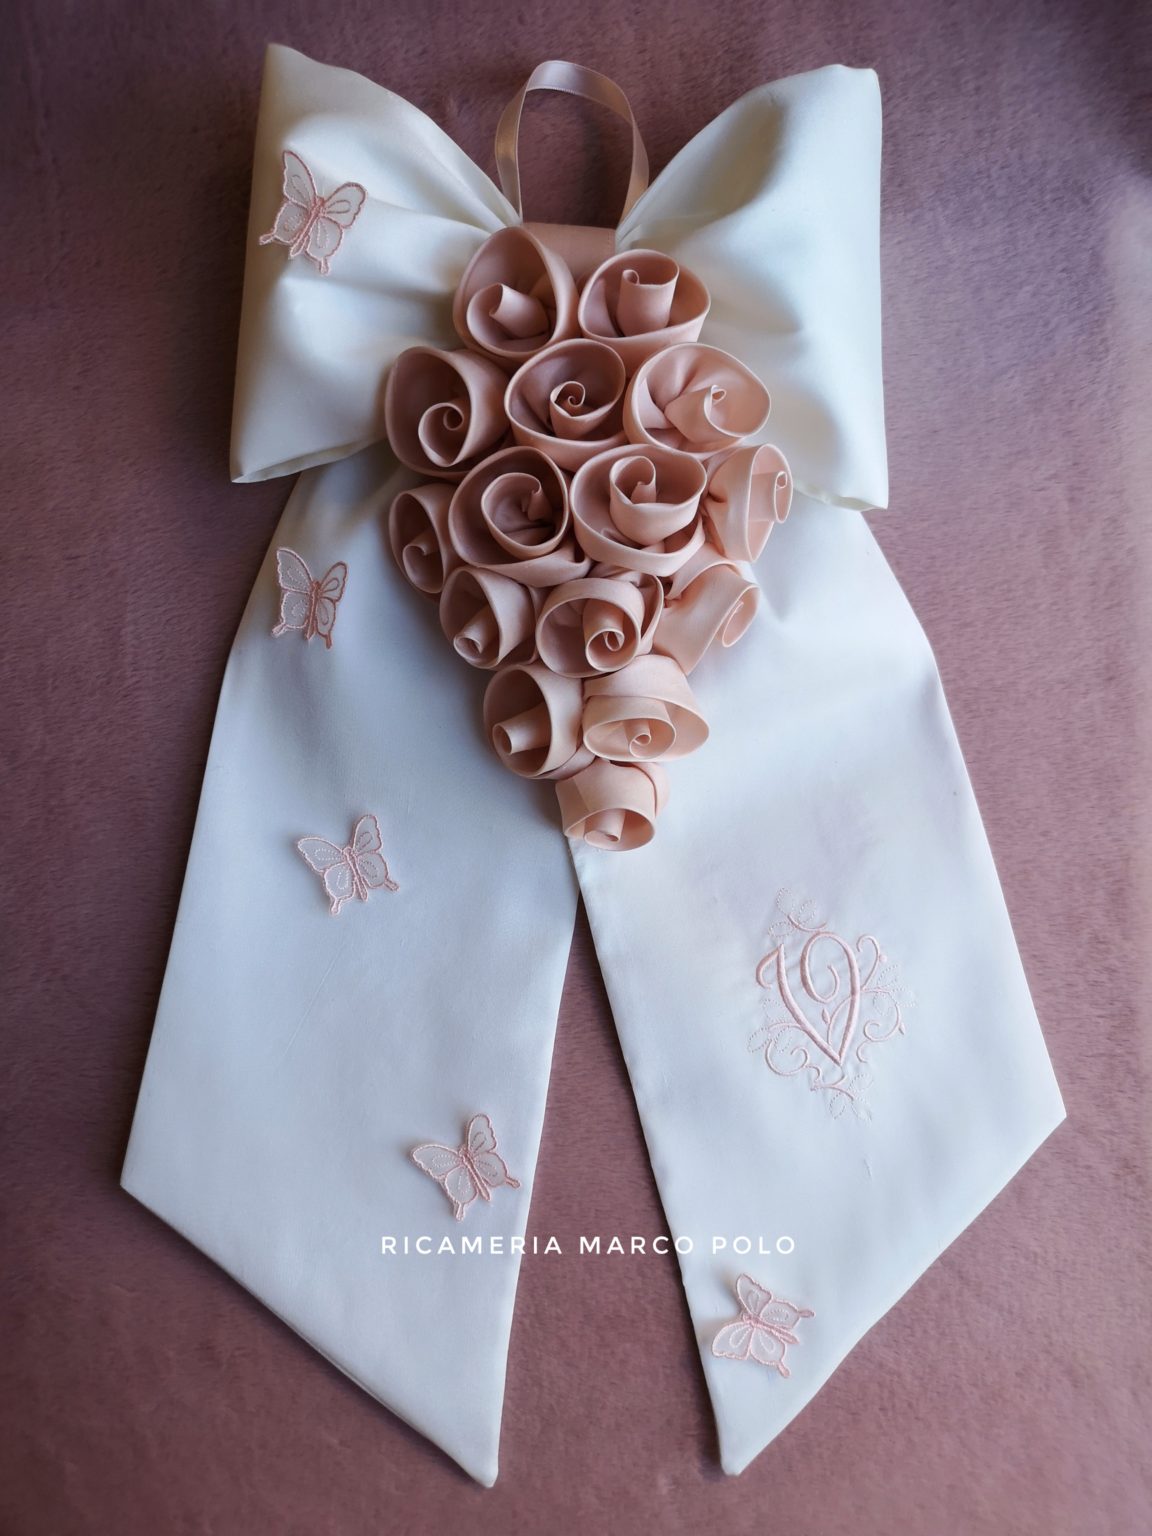 Cascata di rose cipria su fiocco in pura seta bianca